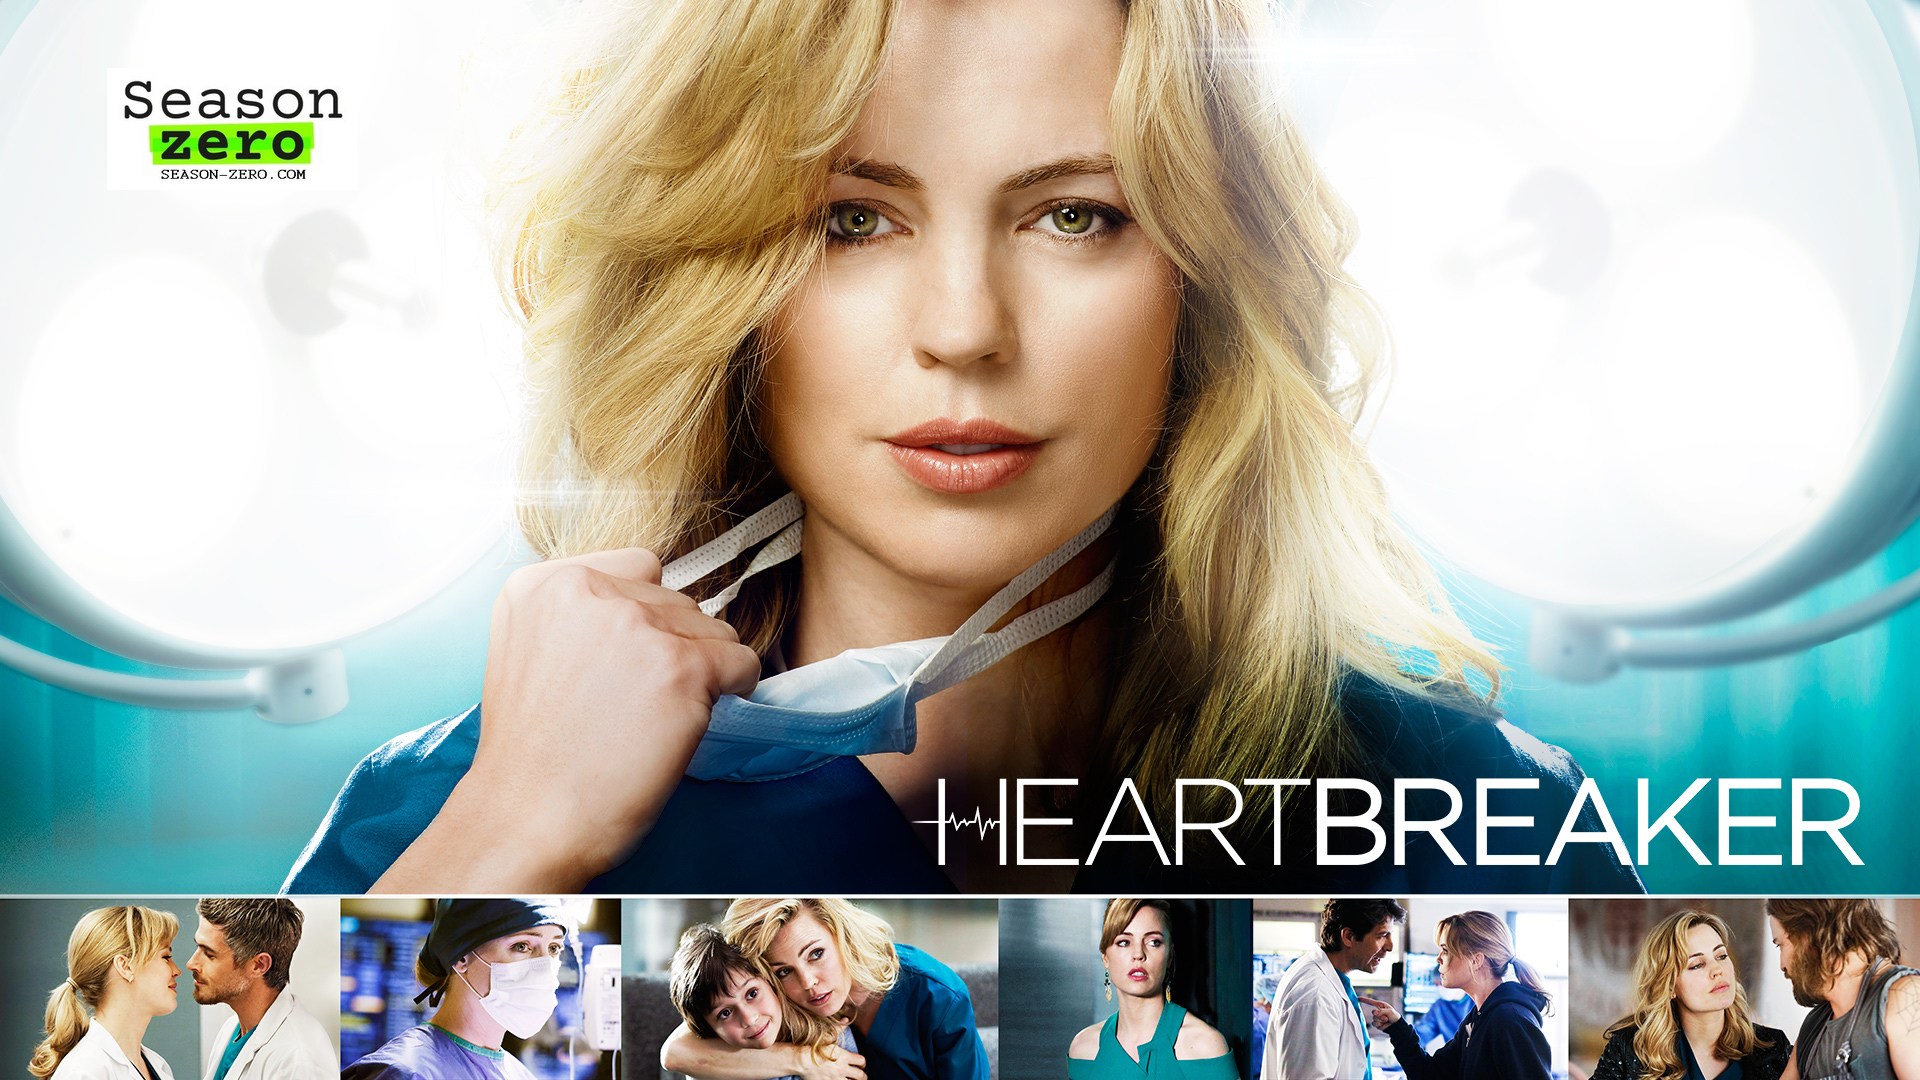 NBC’s Heartbreaker